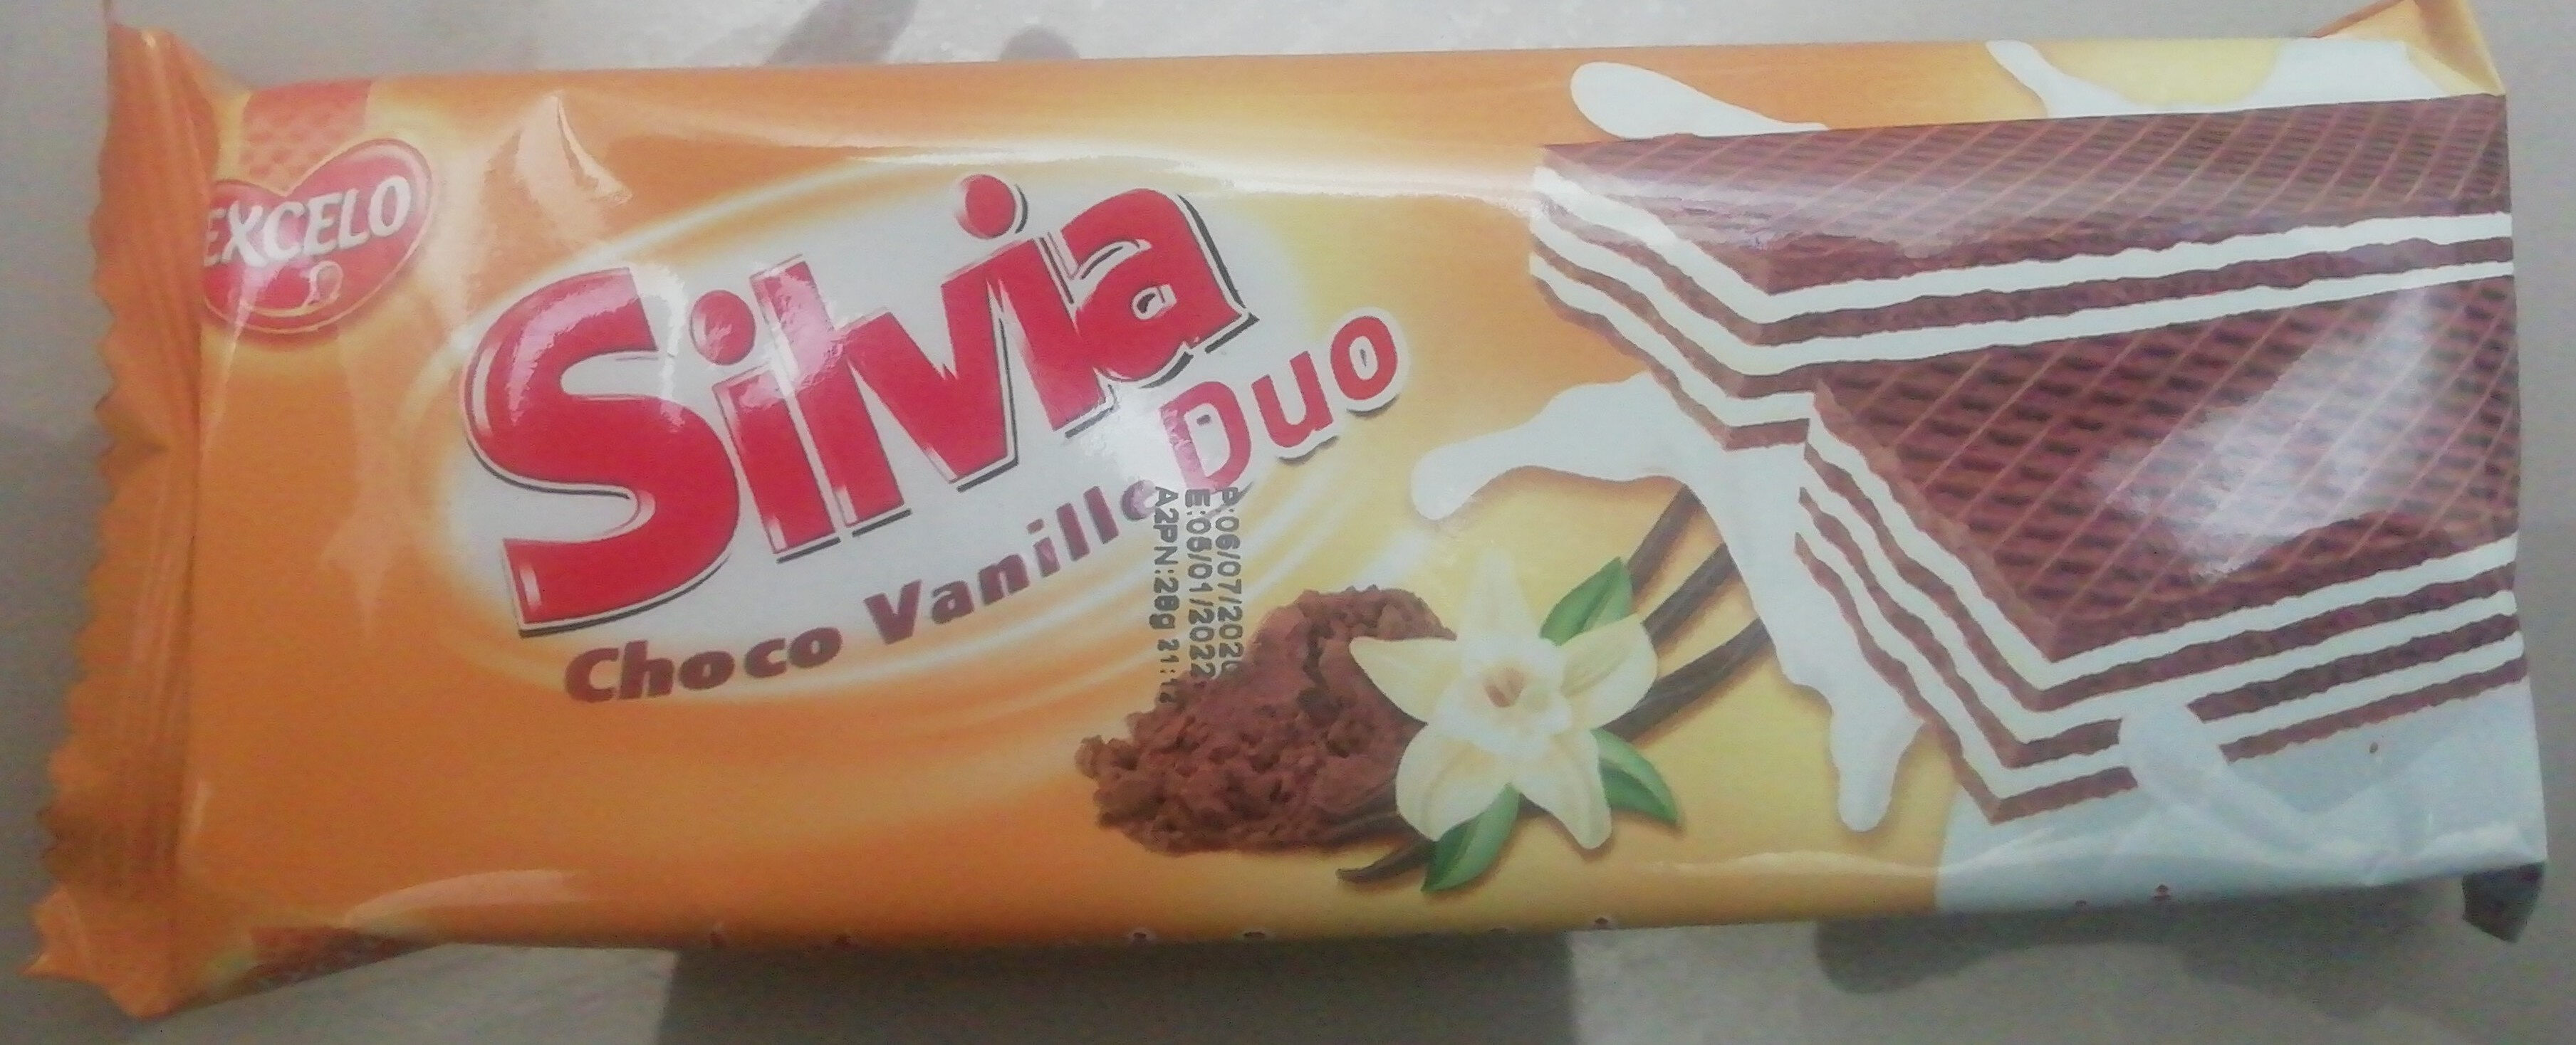 Silvia Duo (Choco Vanille) - Product - ar